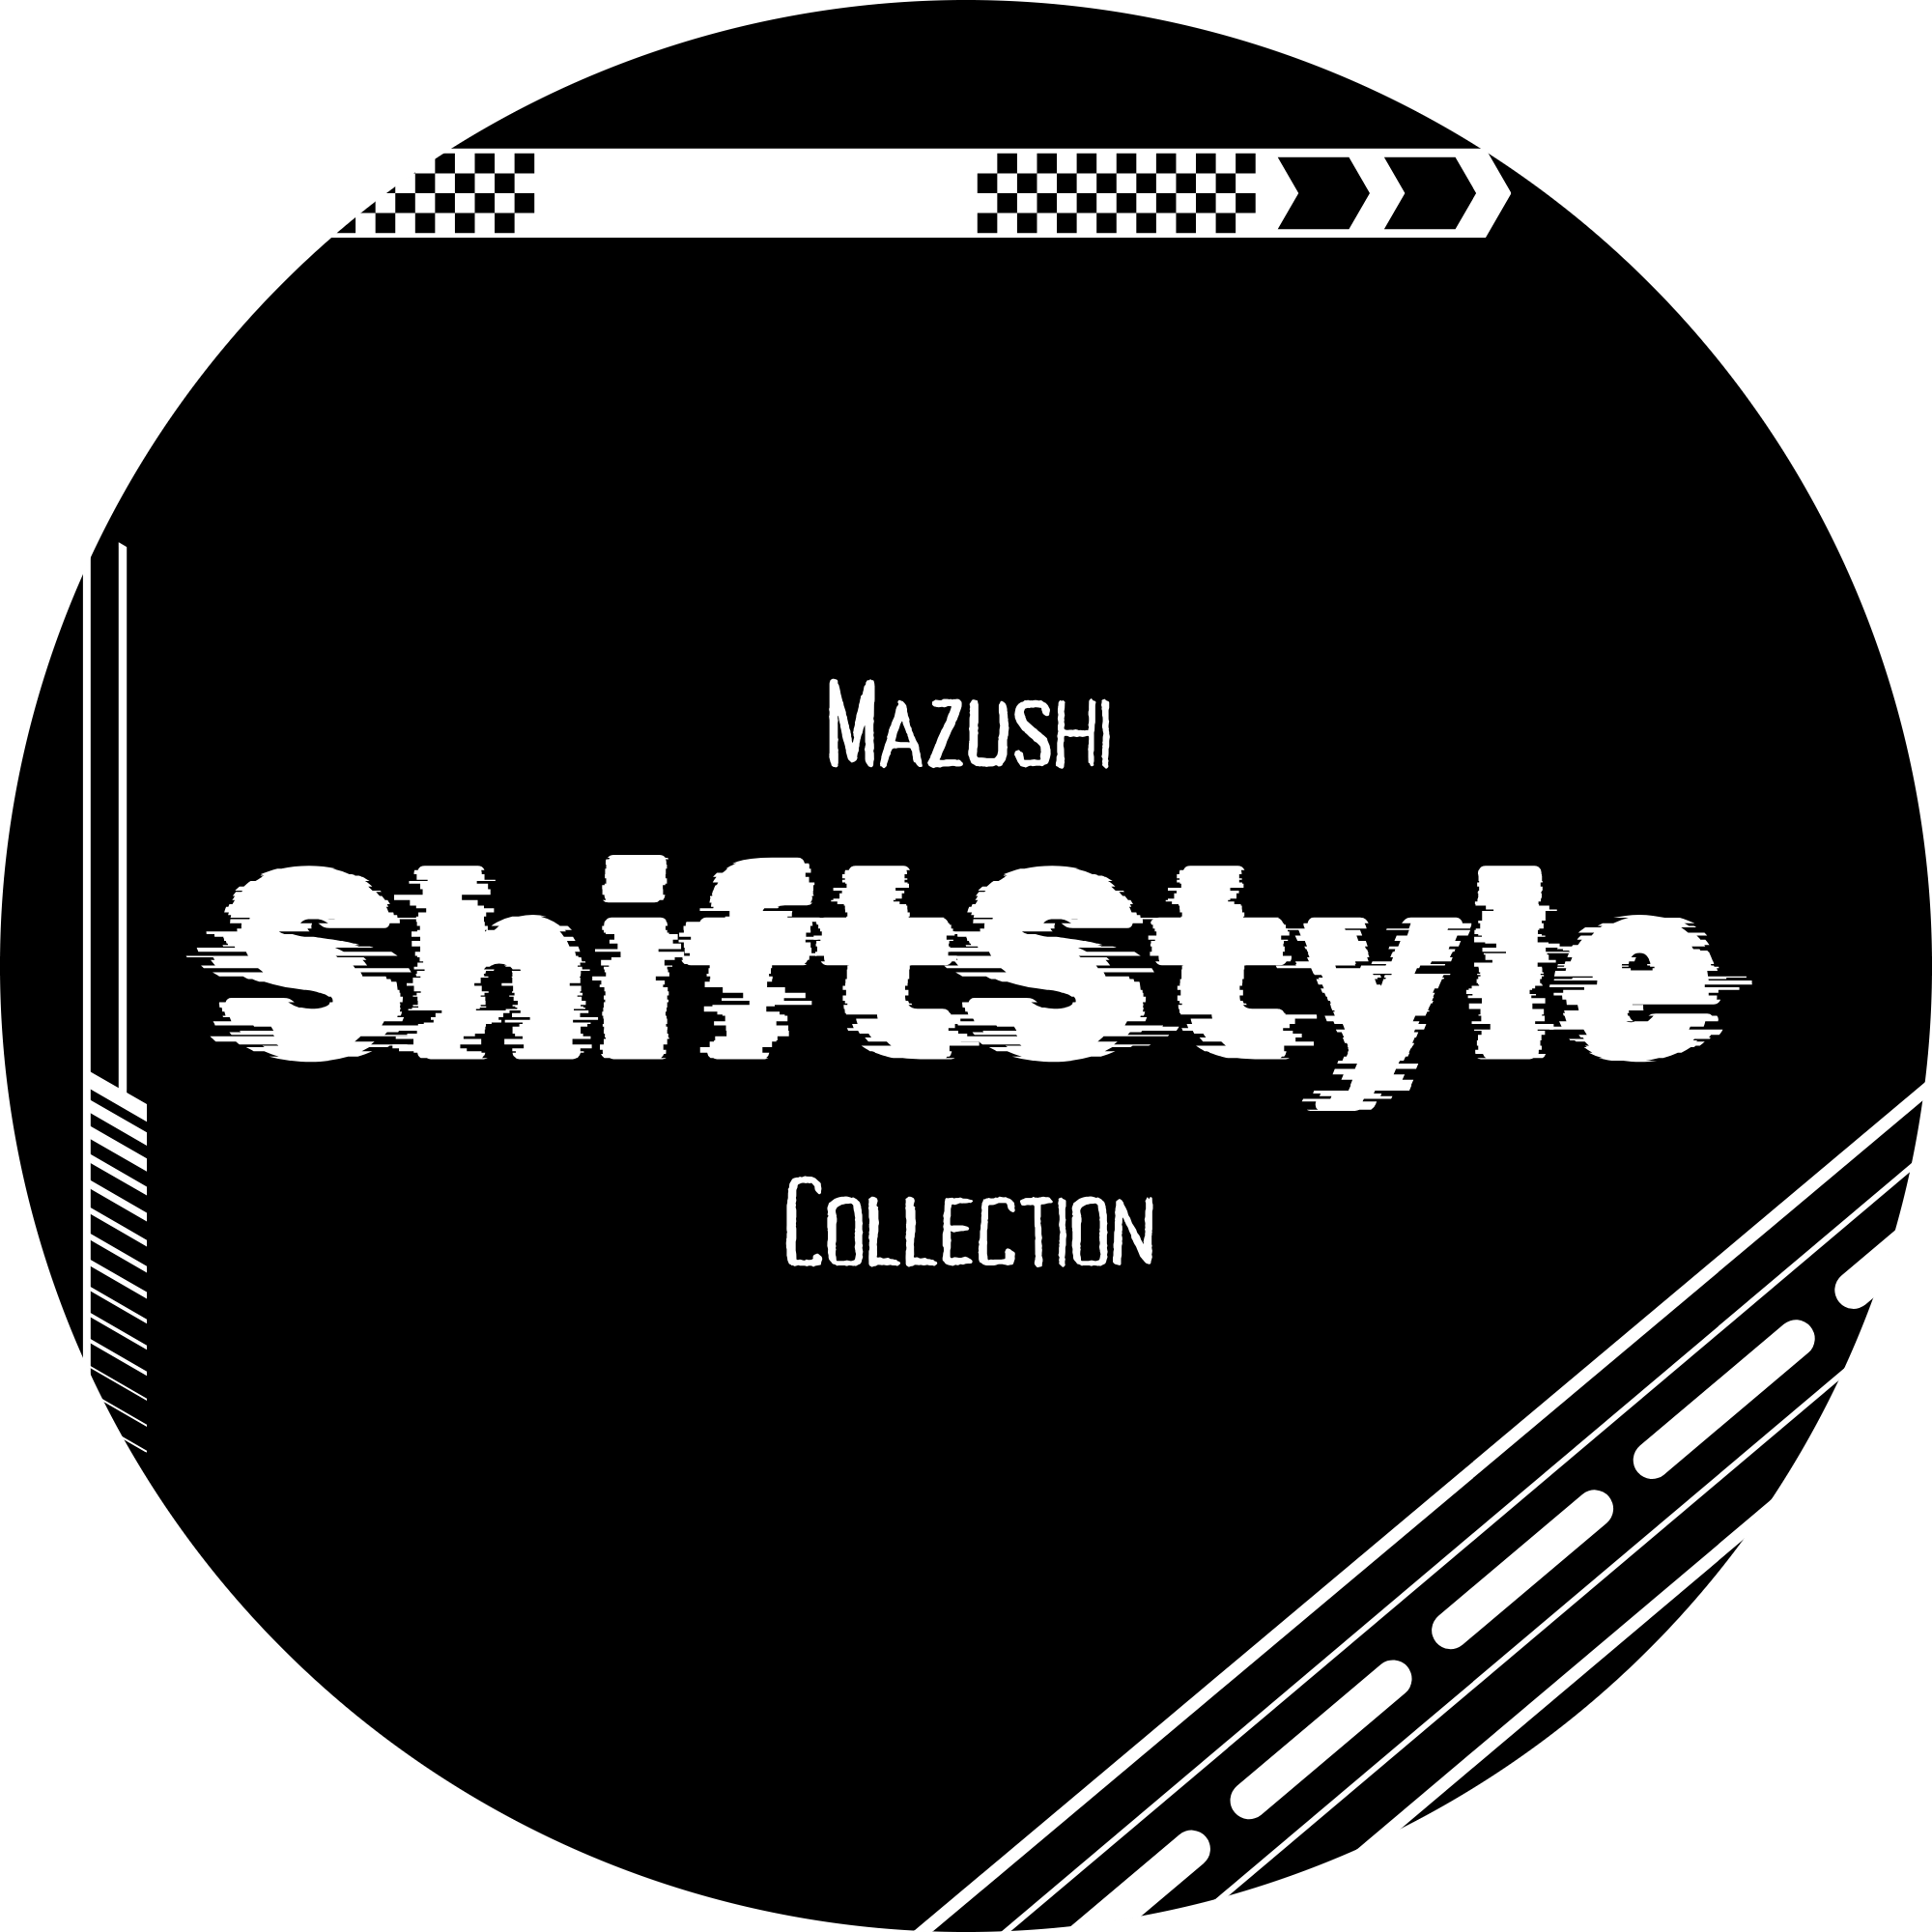 SHIFTSTYLE COLLECTION - Mazushi